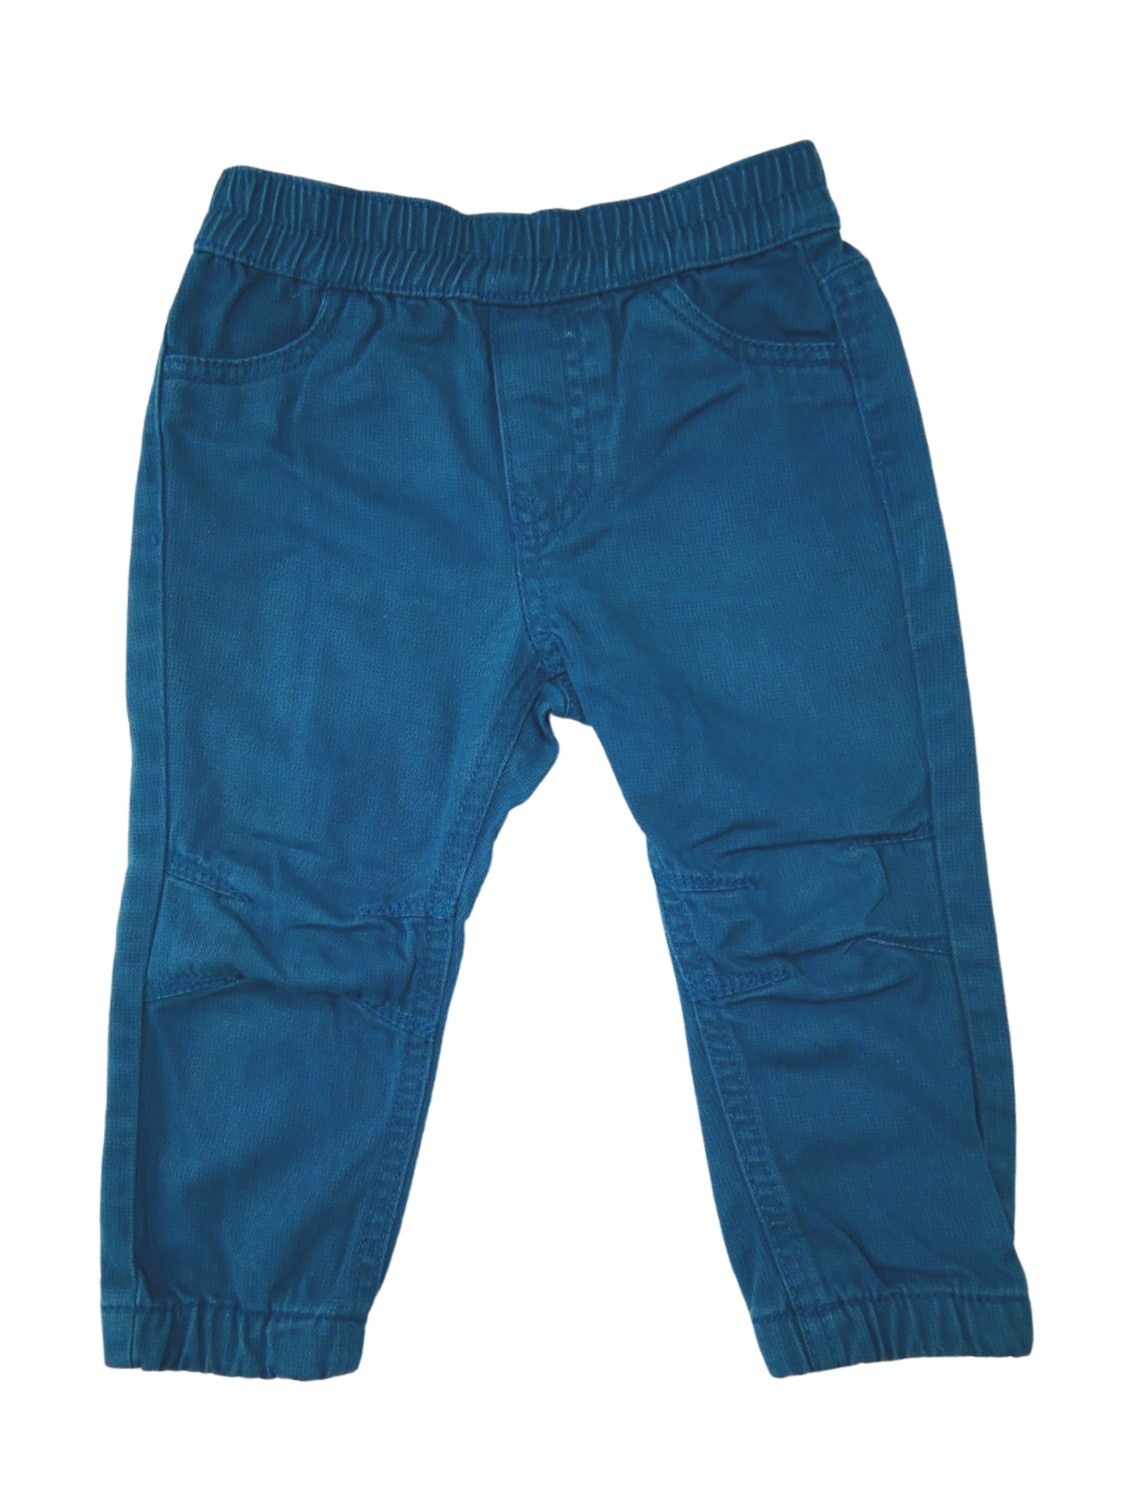 Pantalon bleu canard PAT ET RIPATON taille 18 mois